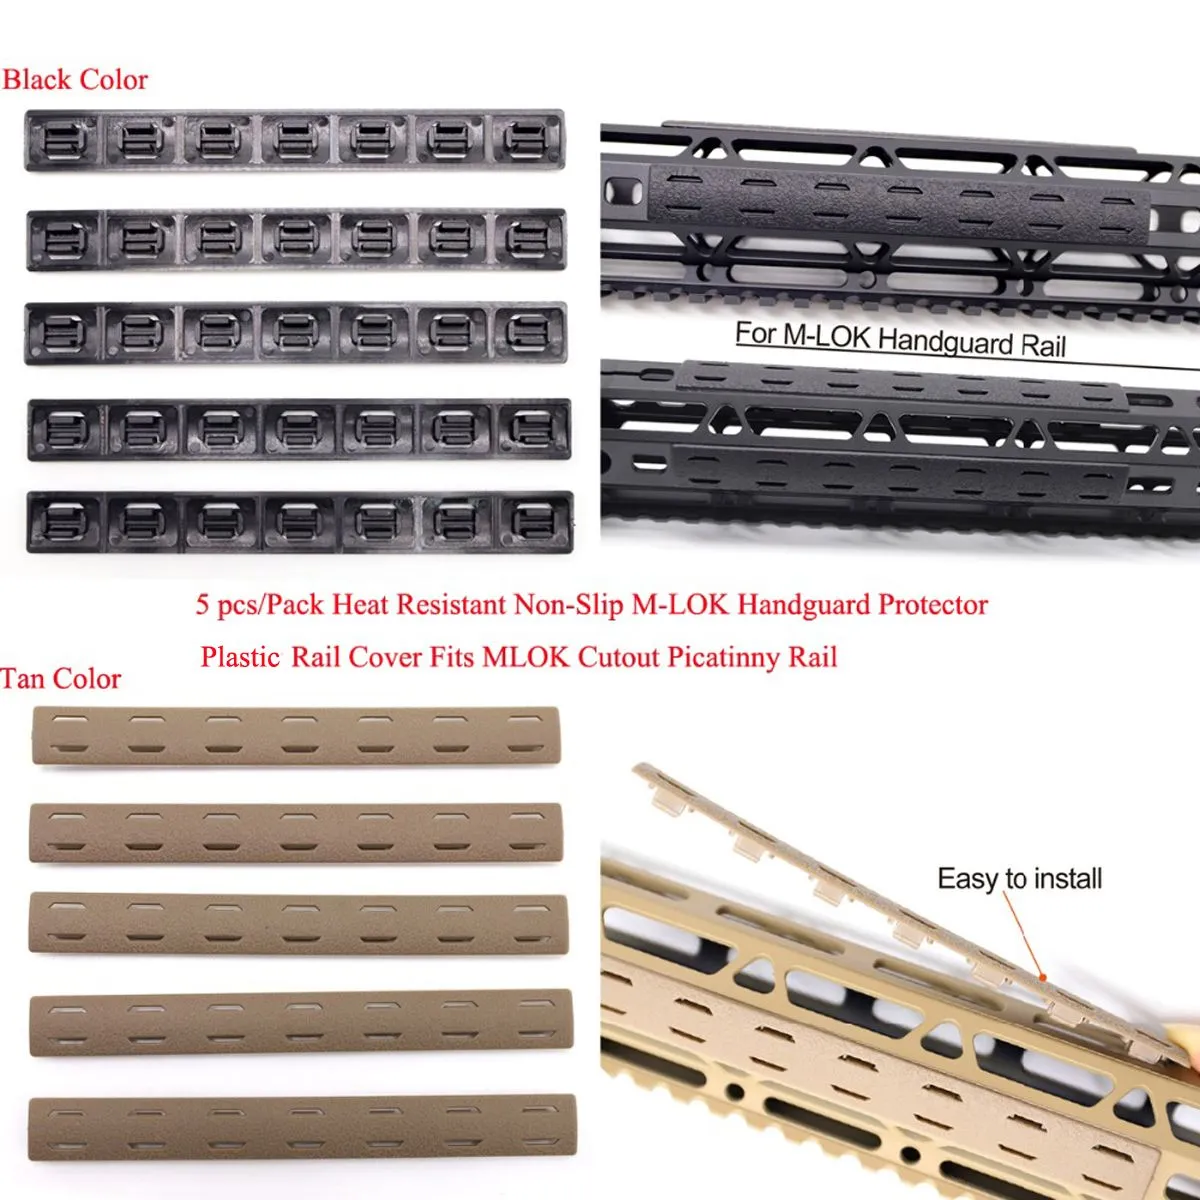 Kinds 3 Rubber Rail Cover Set Plastic Compatible Tactical Polymer Ladder Picatinny/Keymod/M-lok Rail Covers_Black/Tan Color